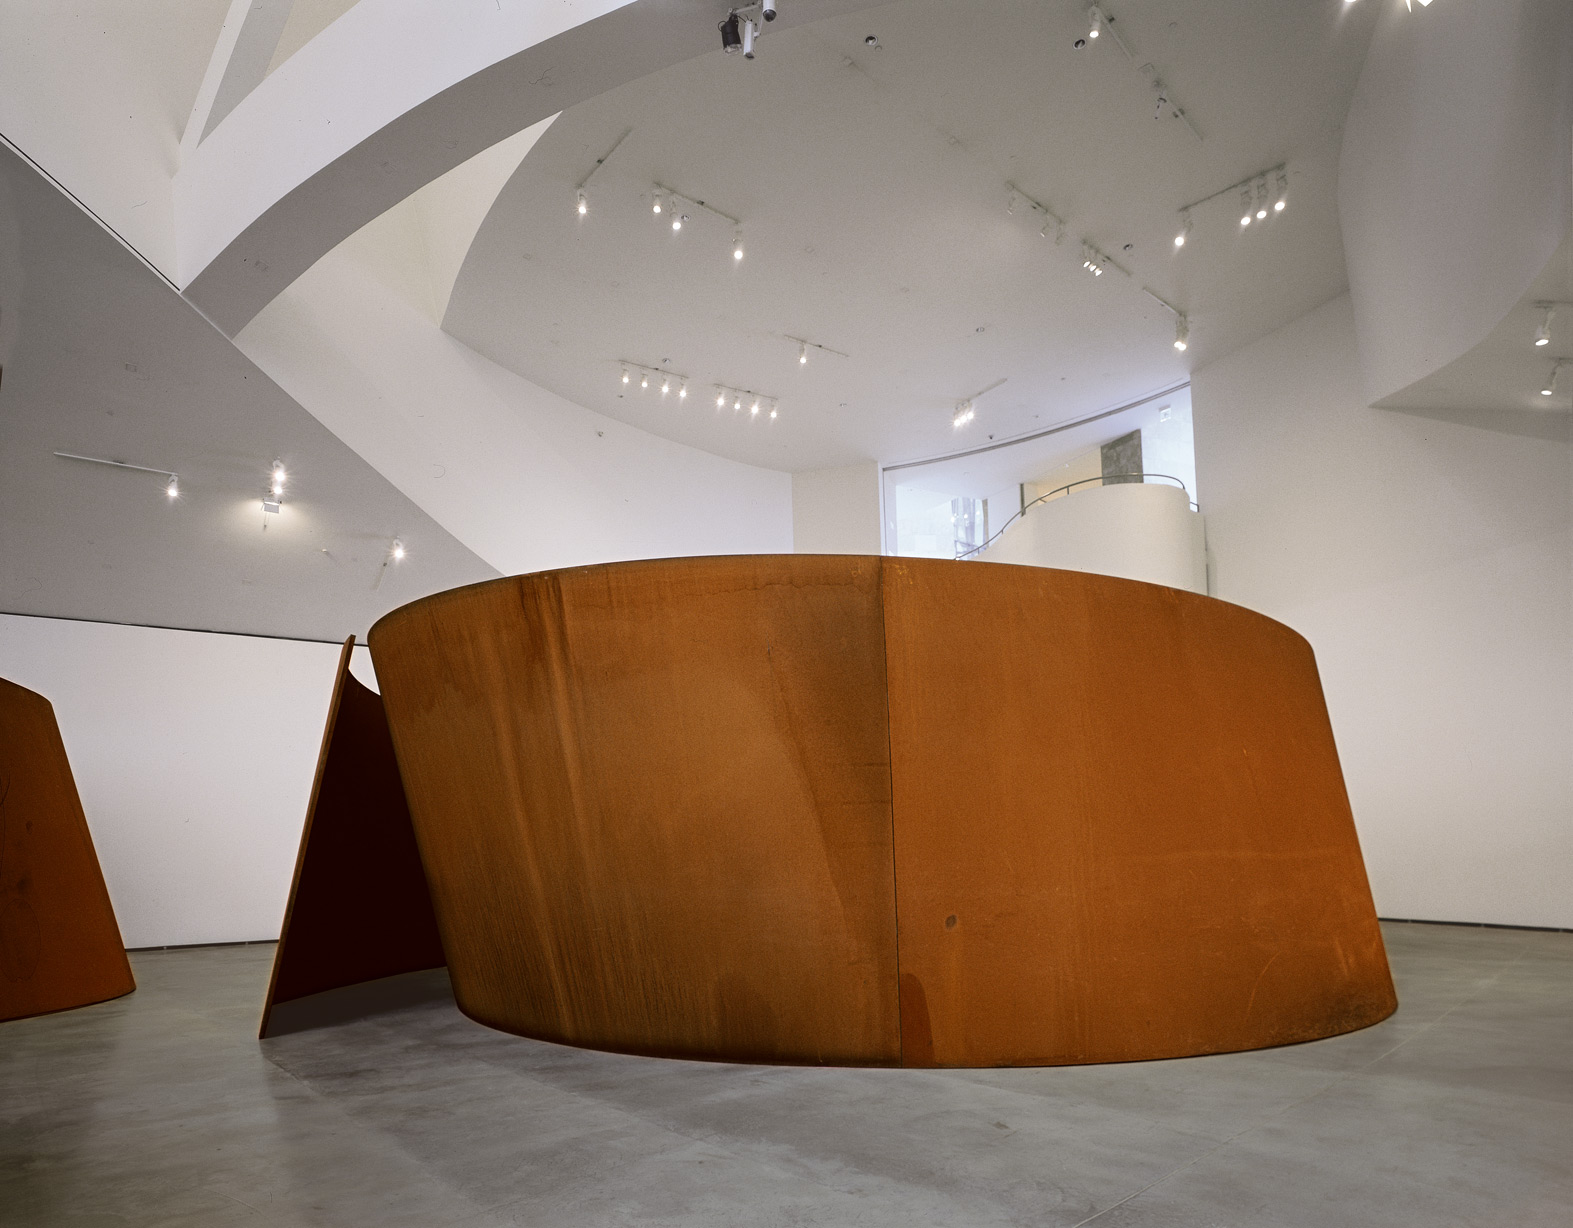 Torsión espiral (cerrada abierta cerrada abierta cerrada) | Richard Serra | Guggenheim Bilbao Museoa